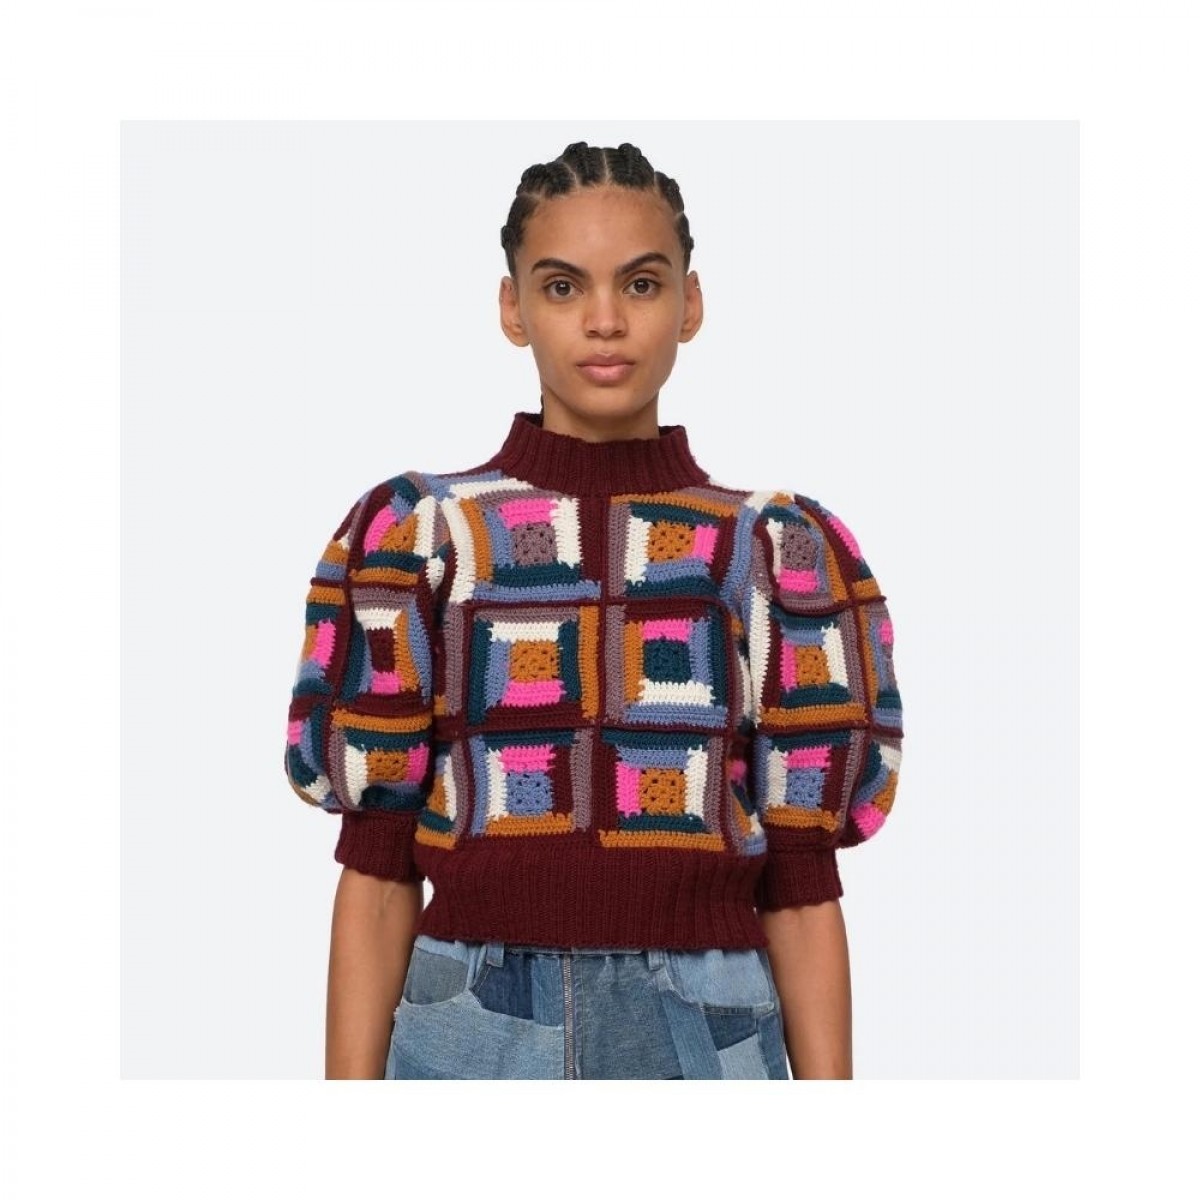 camryn s/s sweater - multi - model front